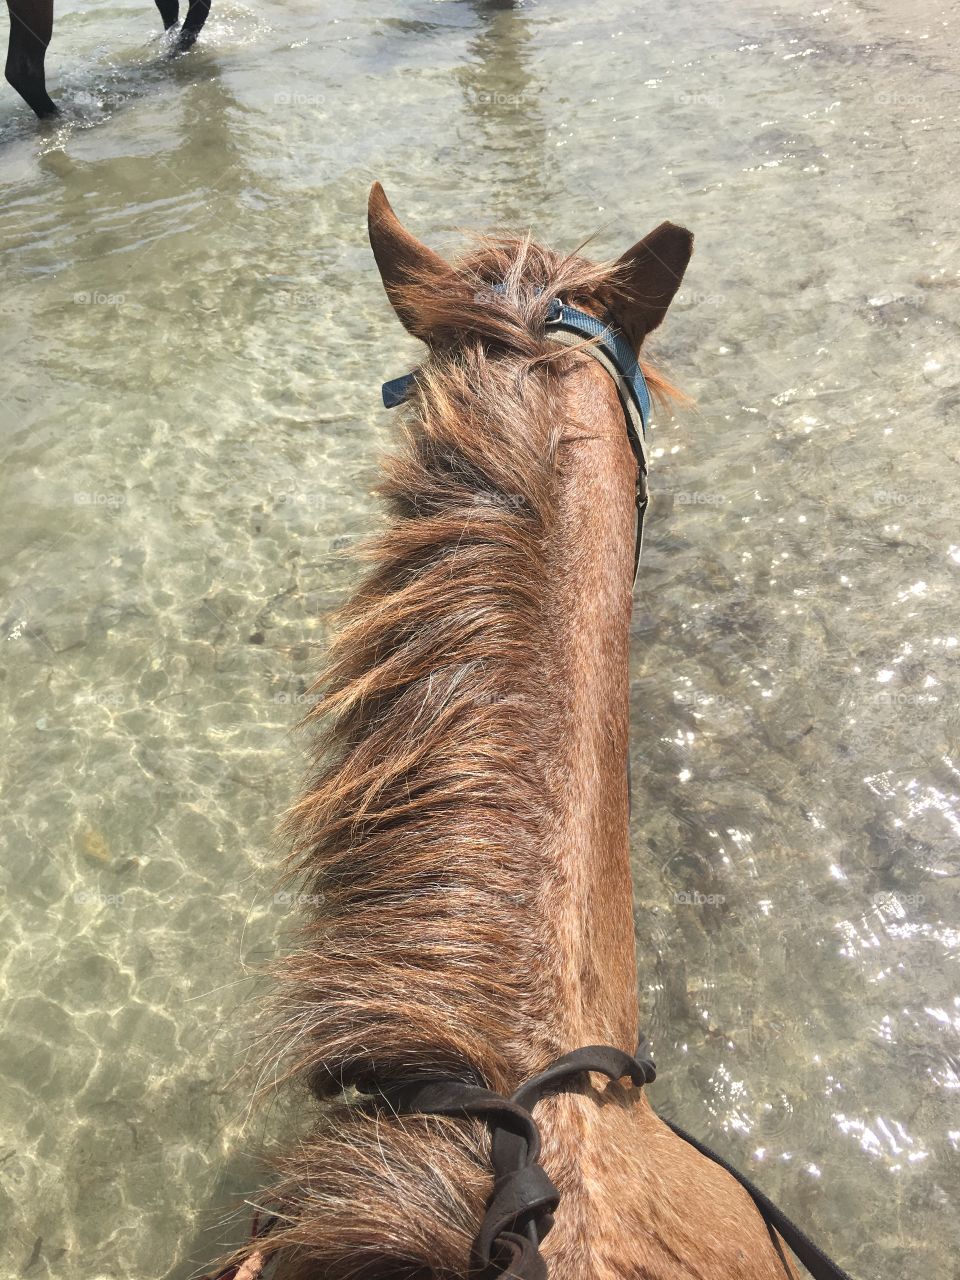 Horseback beach ride 